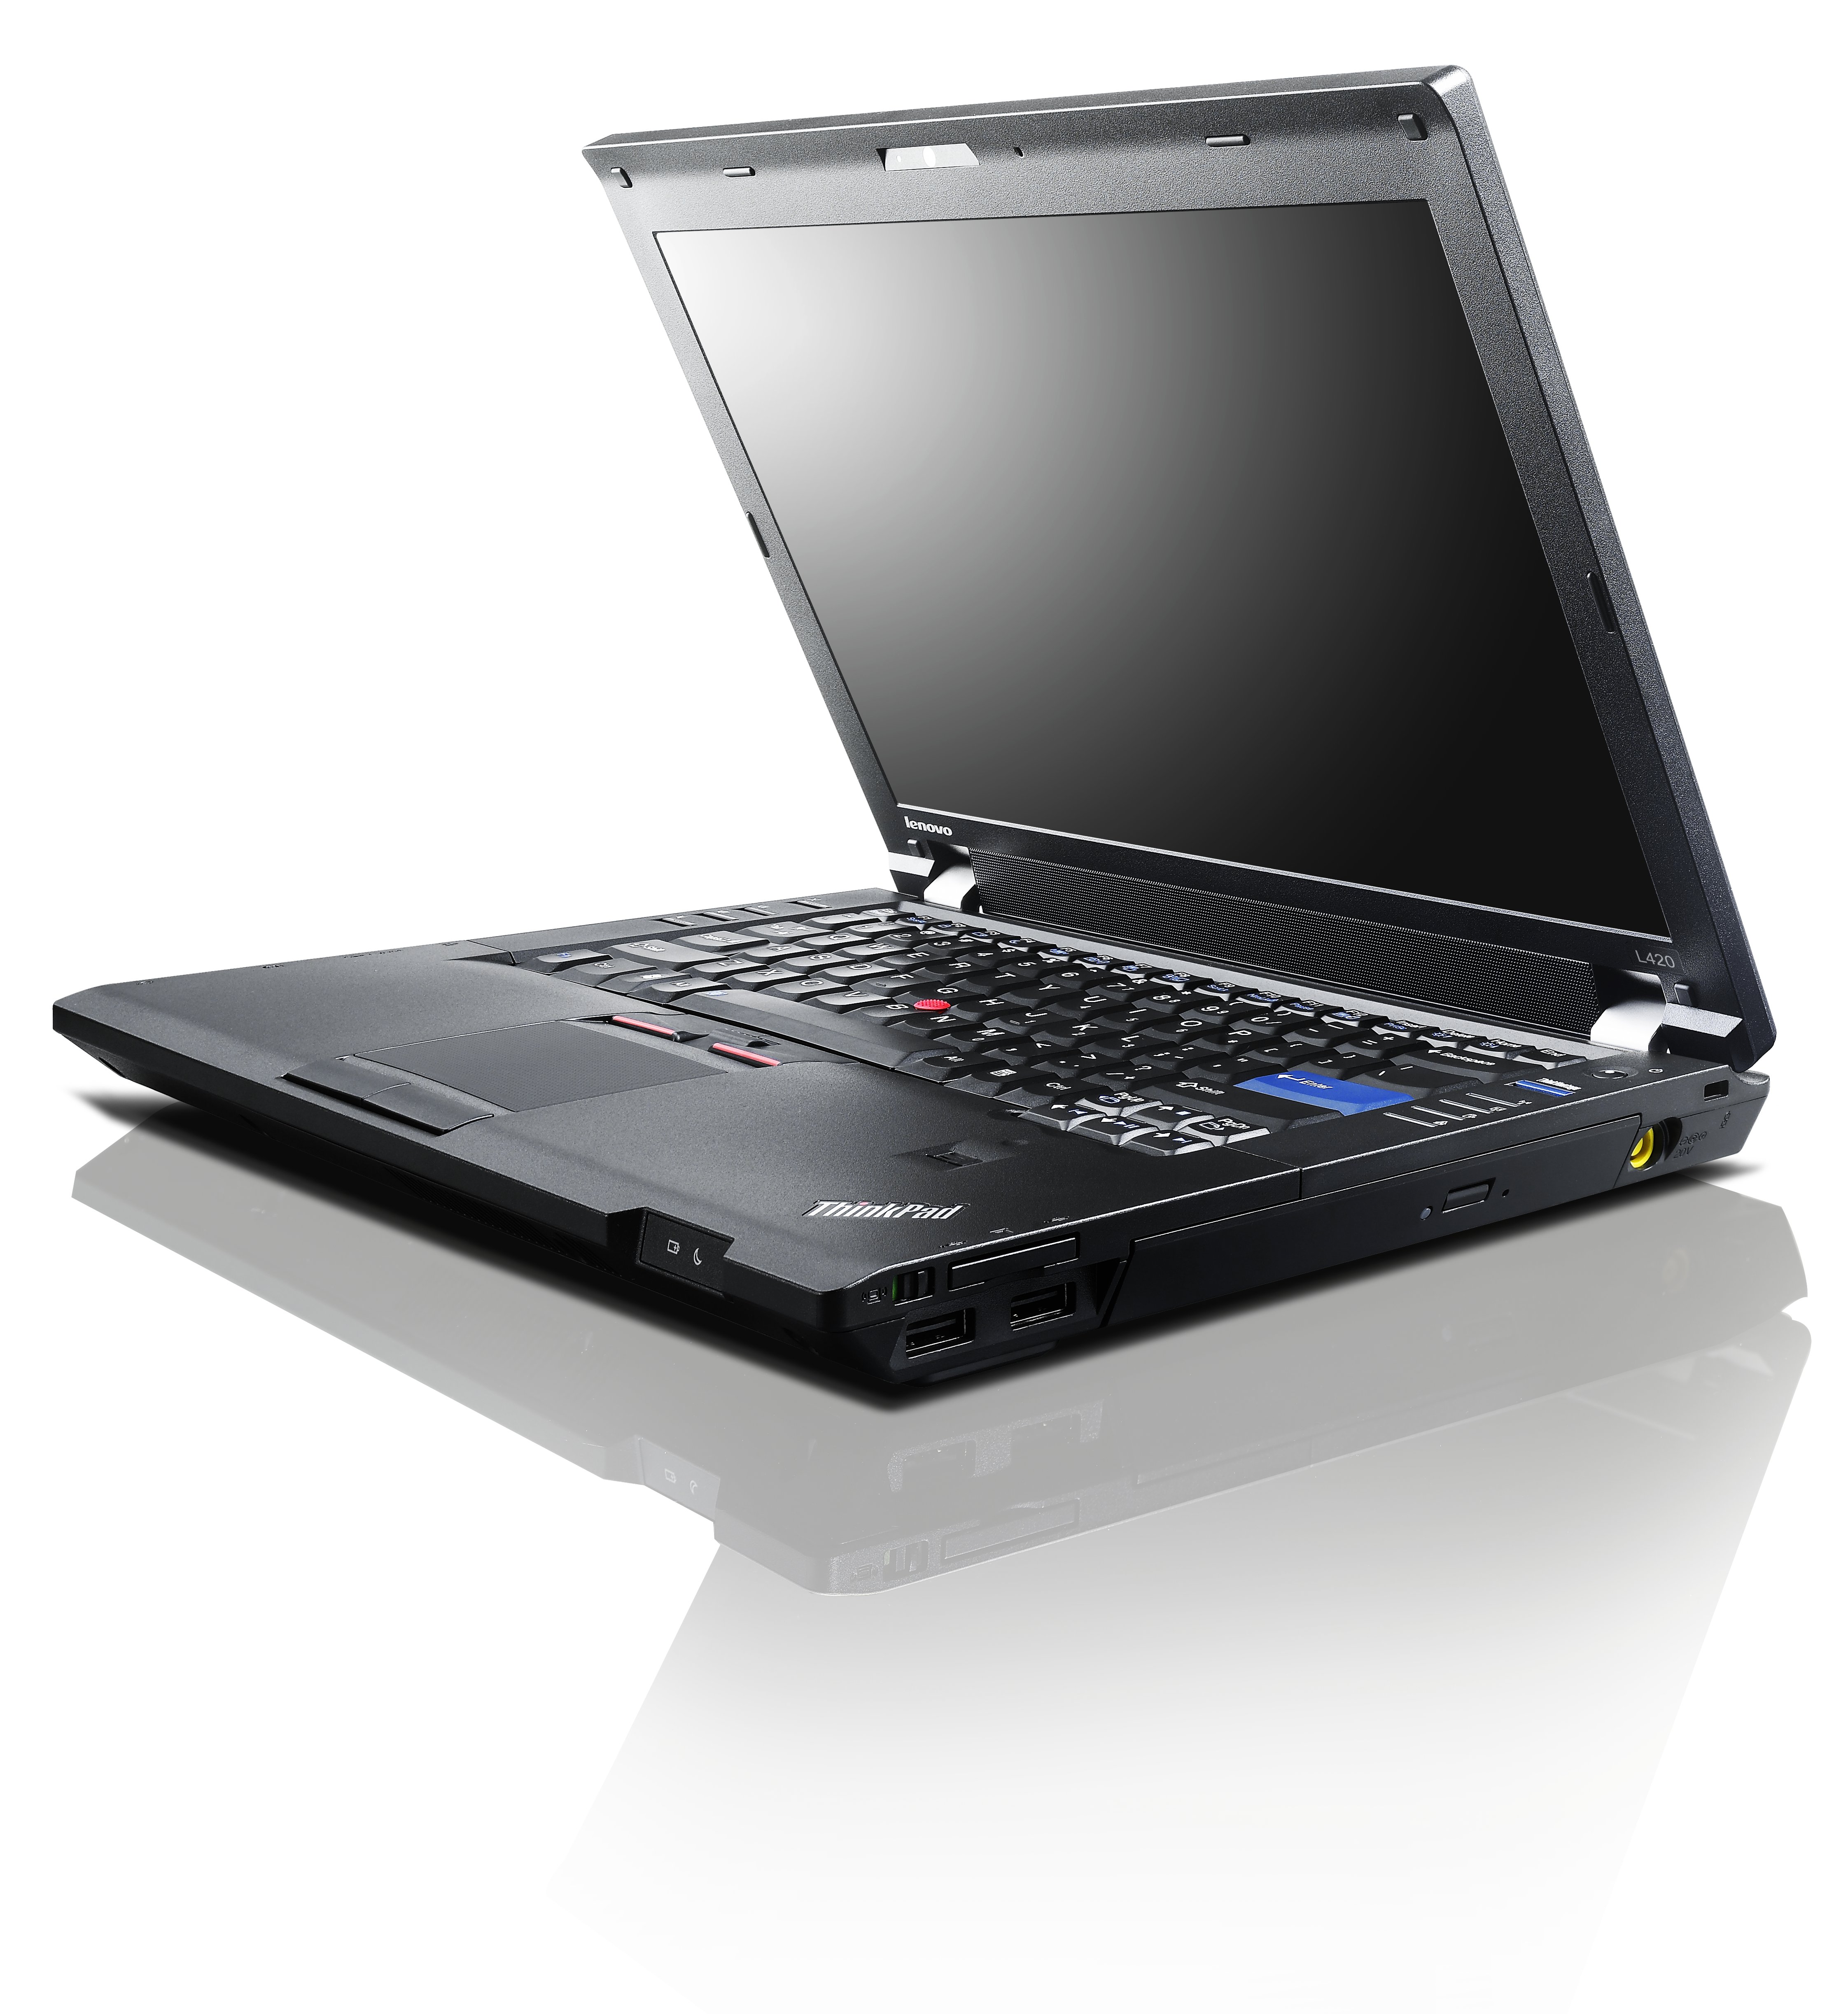  Lenovo  ThinkPad L420  Details Specs and Photos